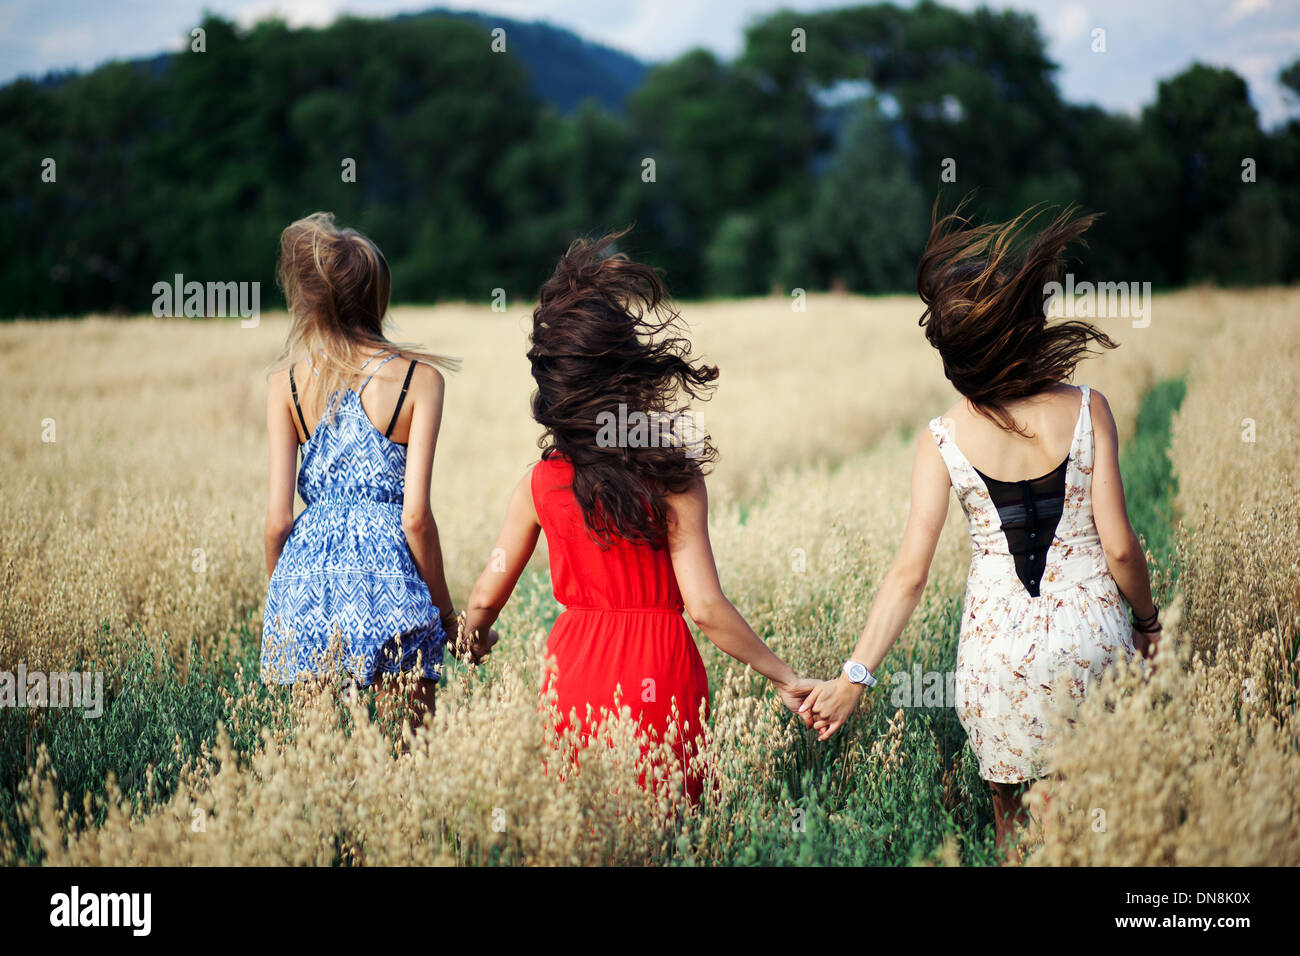 Three women walk hand in hand through a cornfield Stock Photo